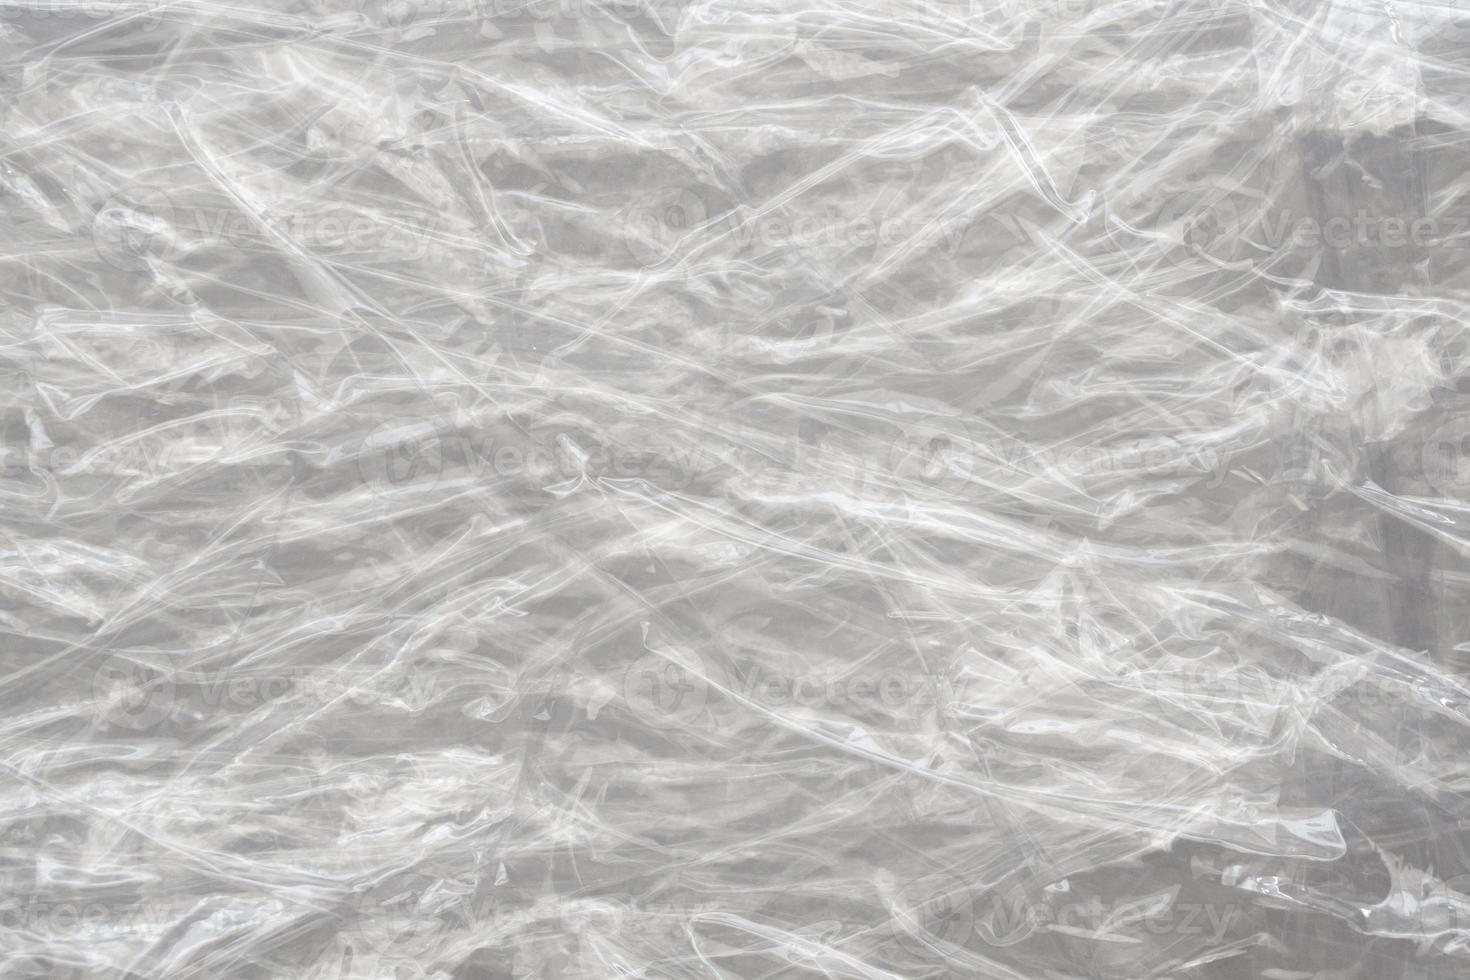 White plastic film wrap texture background photo